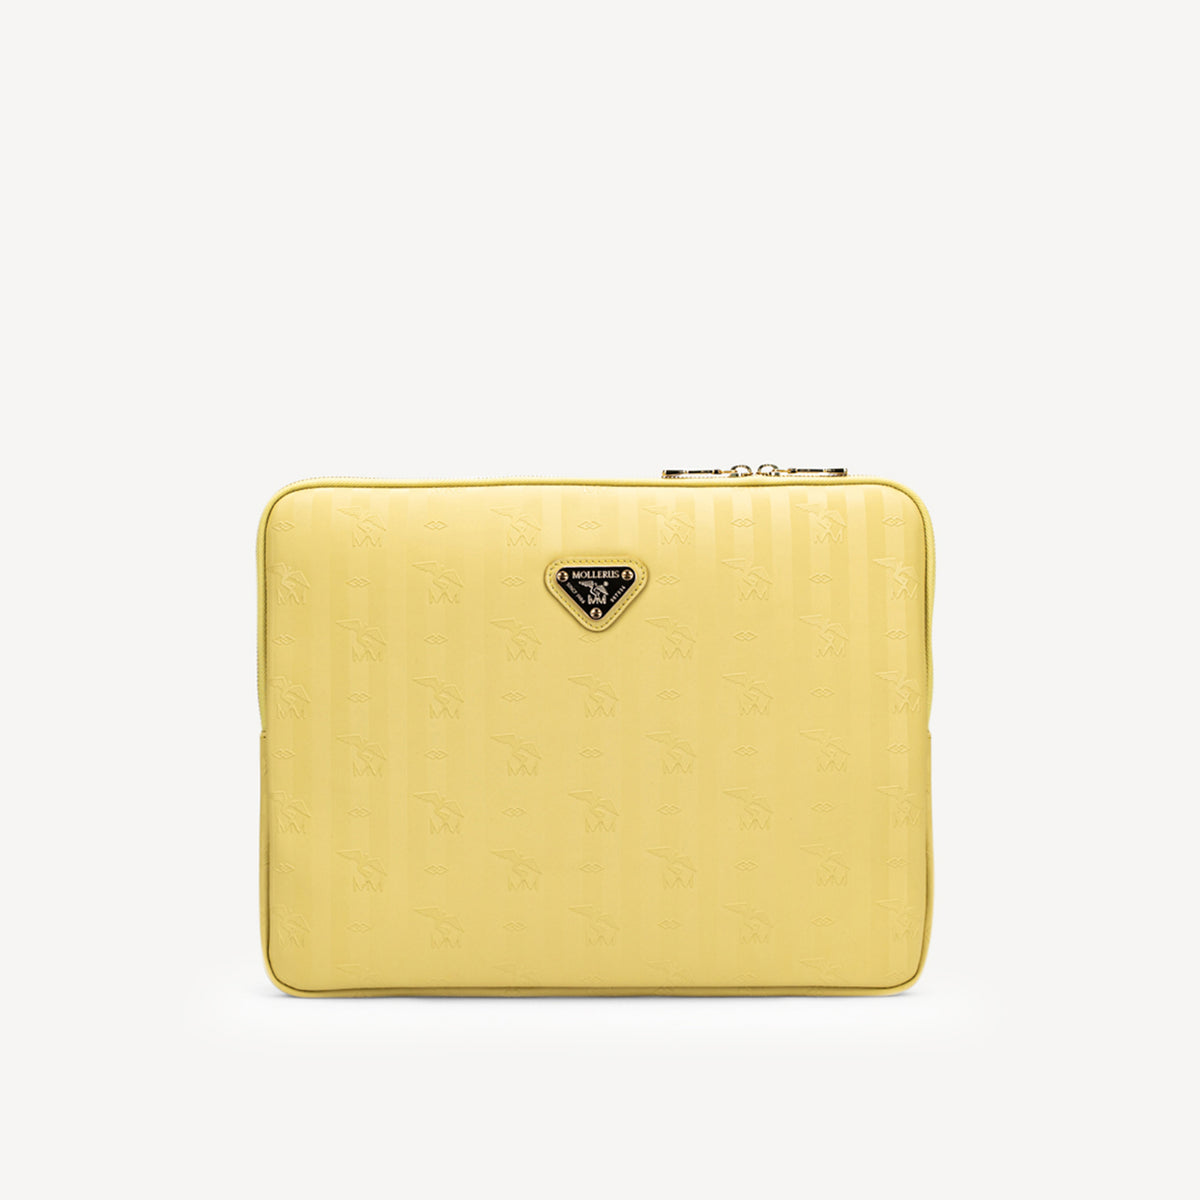 ROETI | Laptop bag light yellow/gold